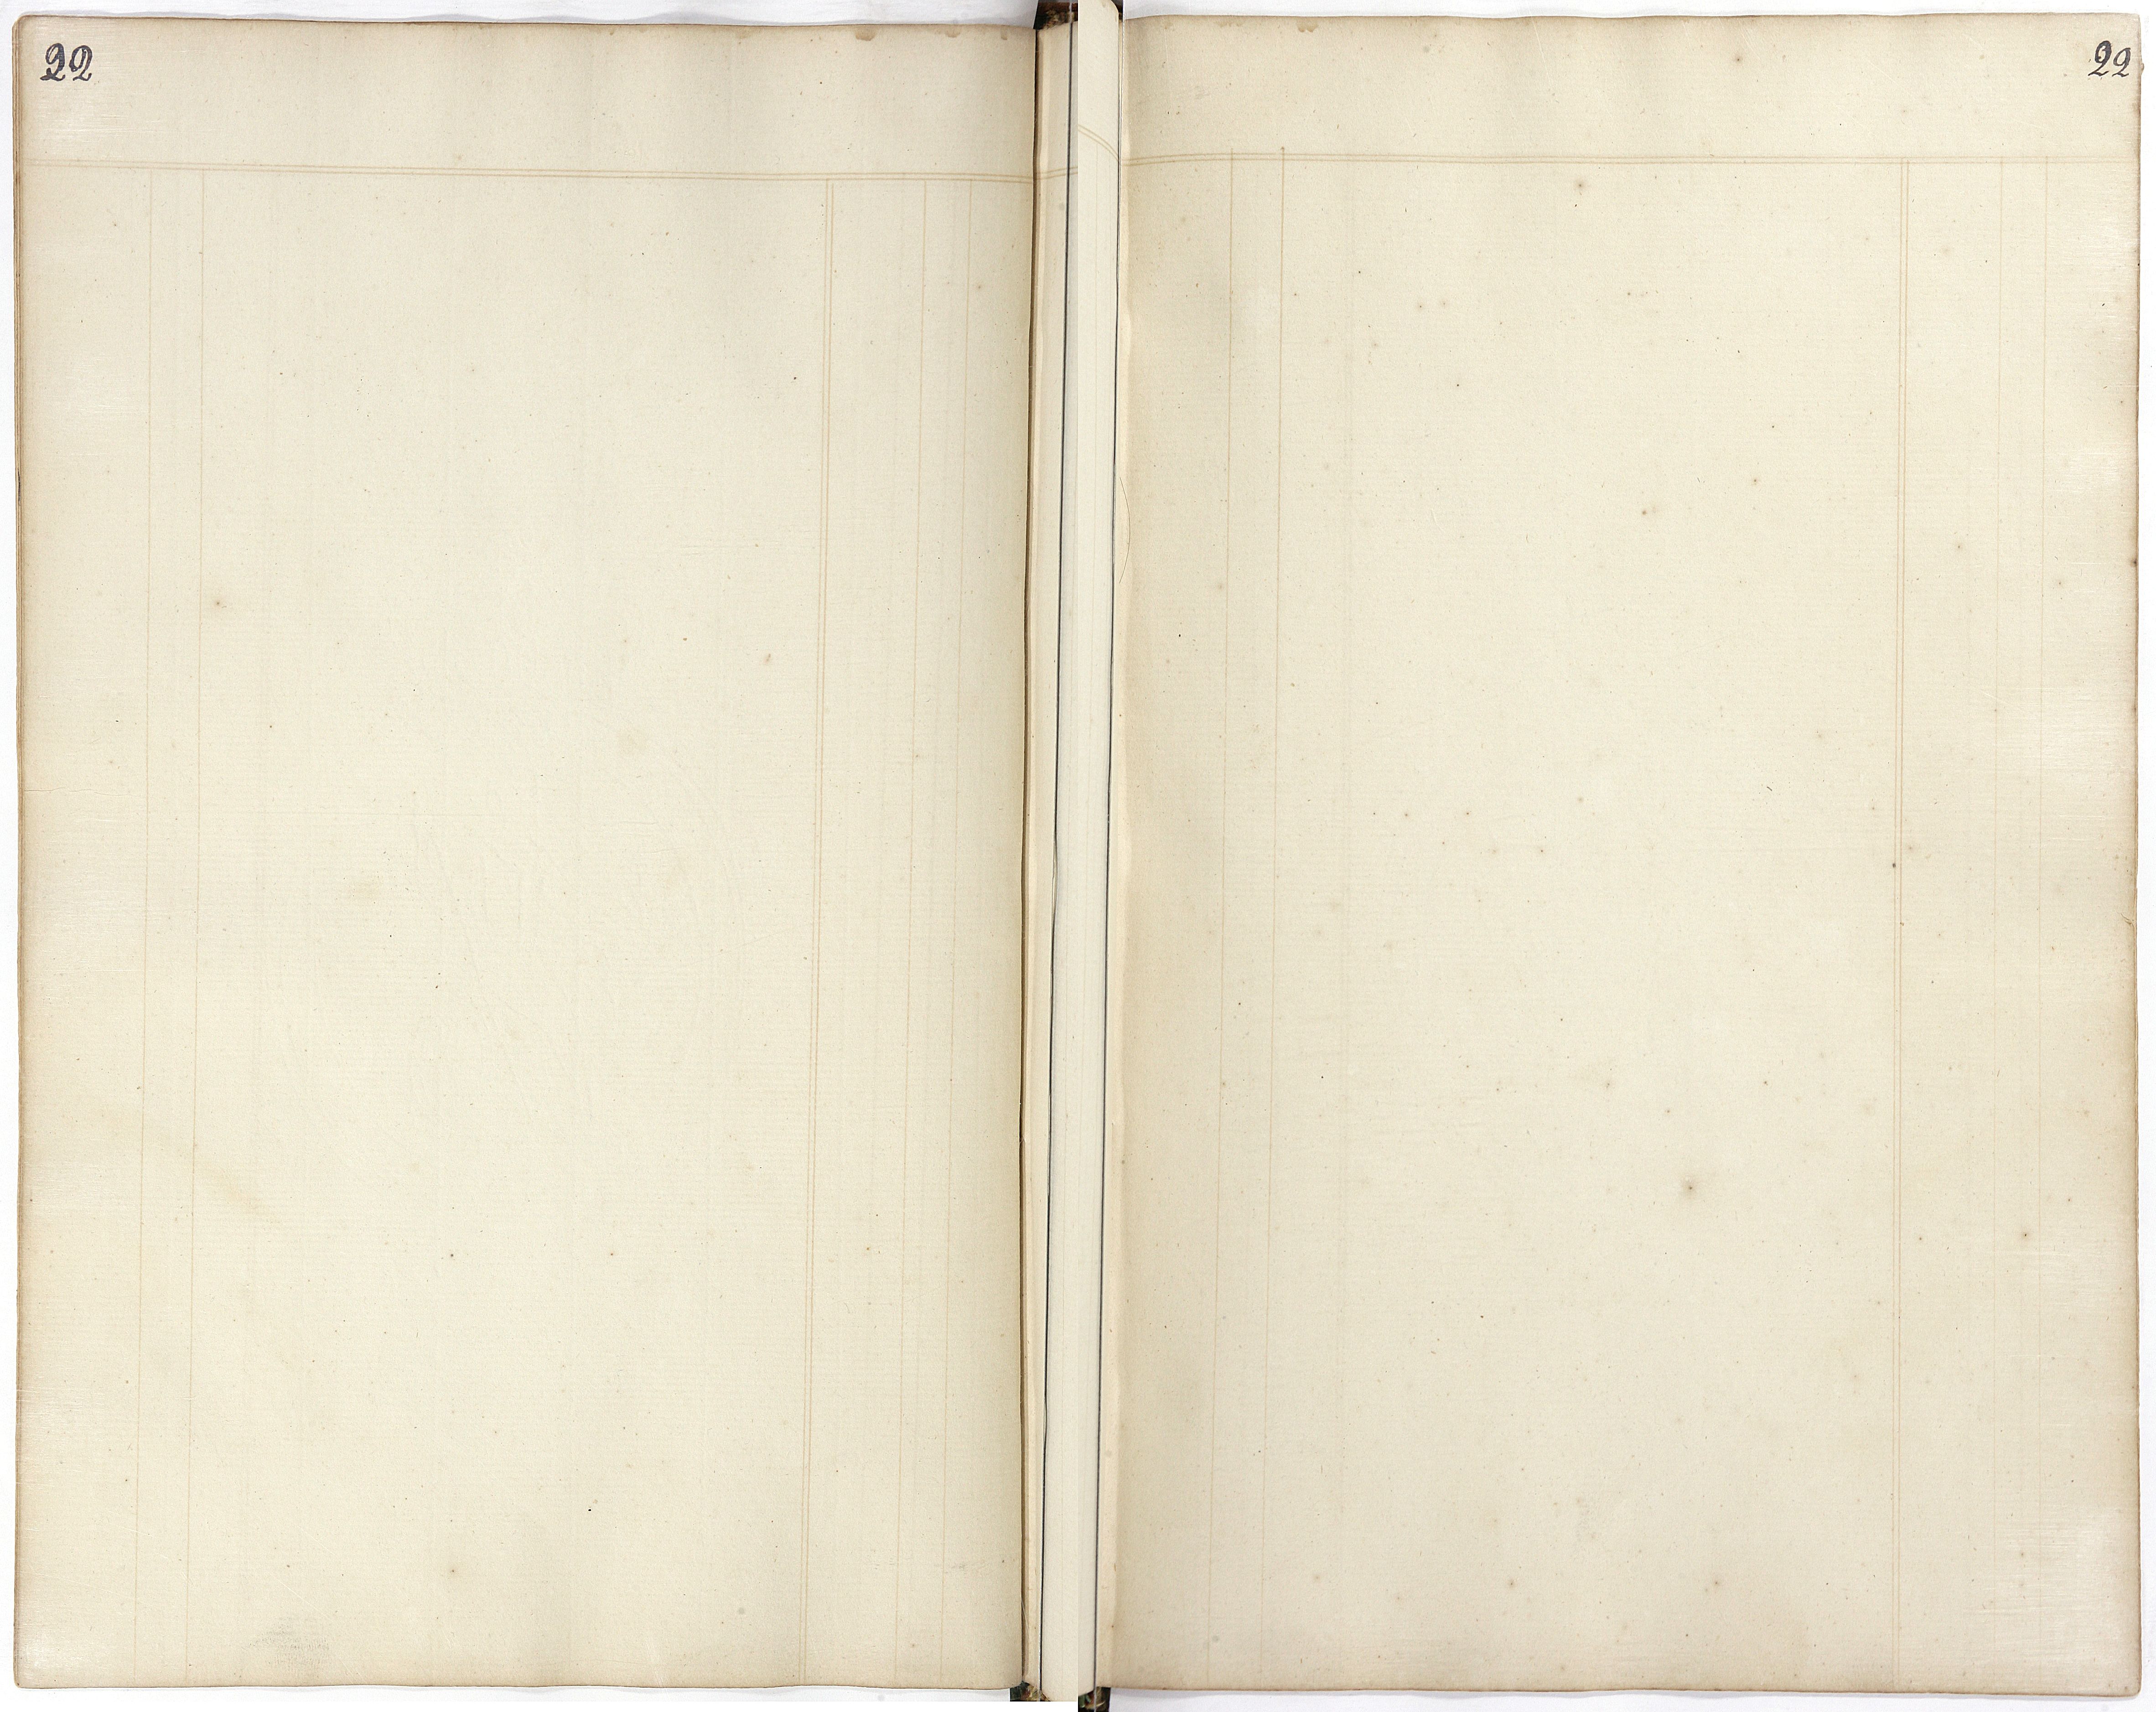 Image of Folio 22 (transcription below)